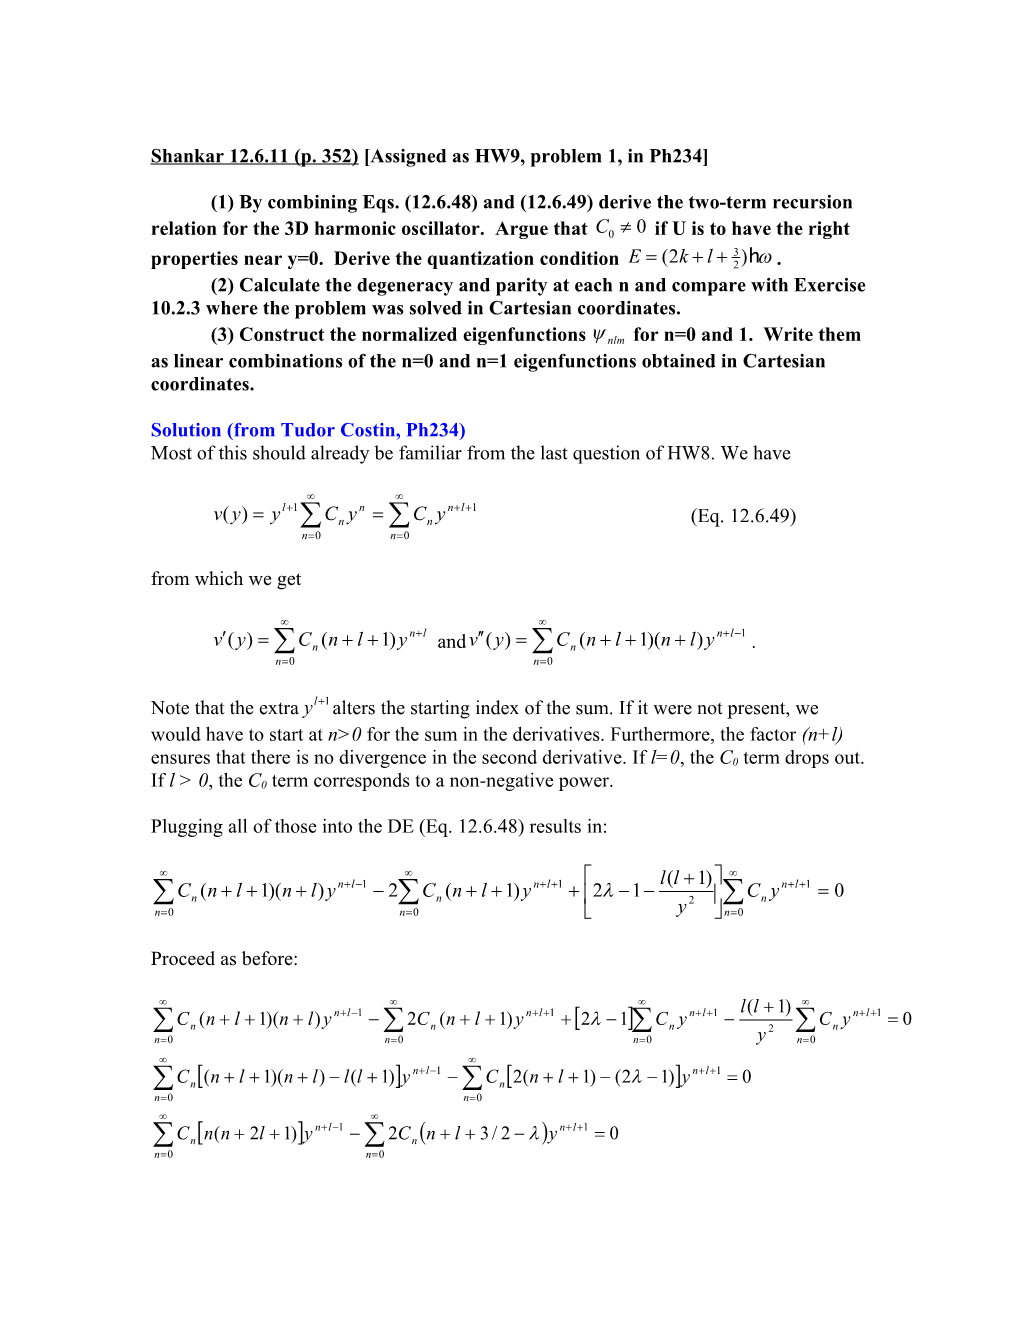 Shankar 12.6.11 (P. 352) Assigned As HW9, Problem 1, in Ph234